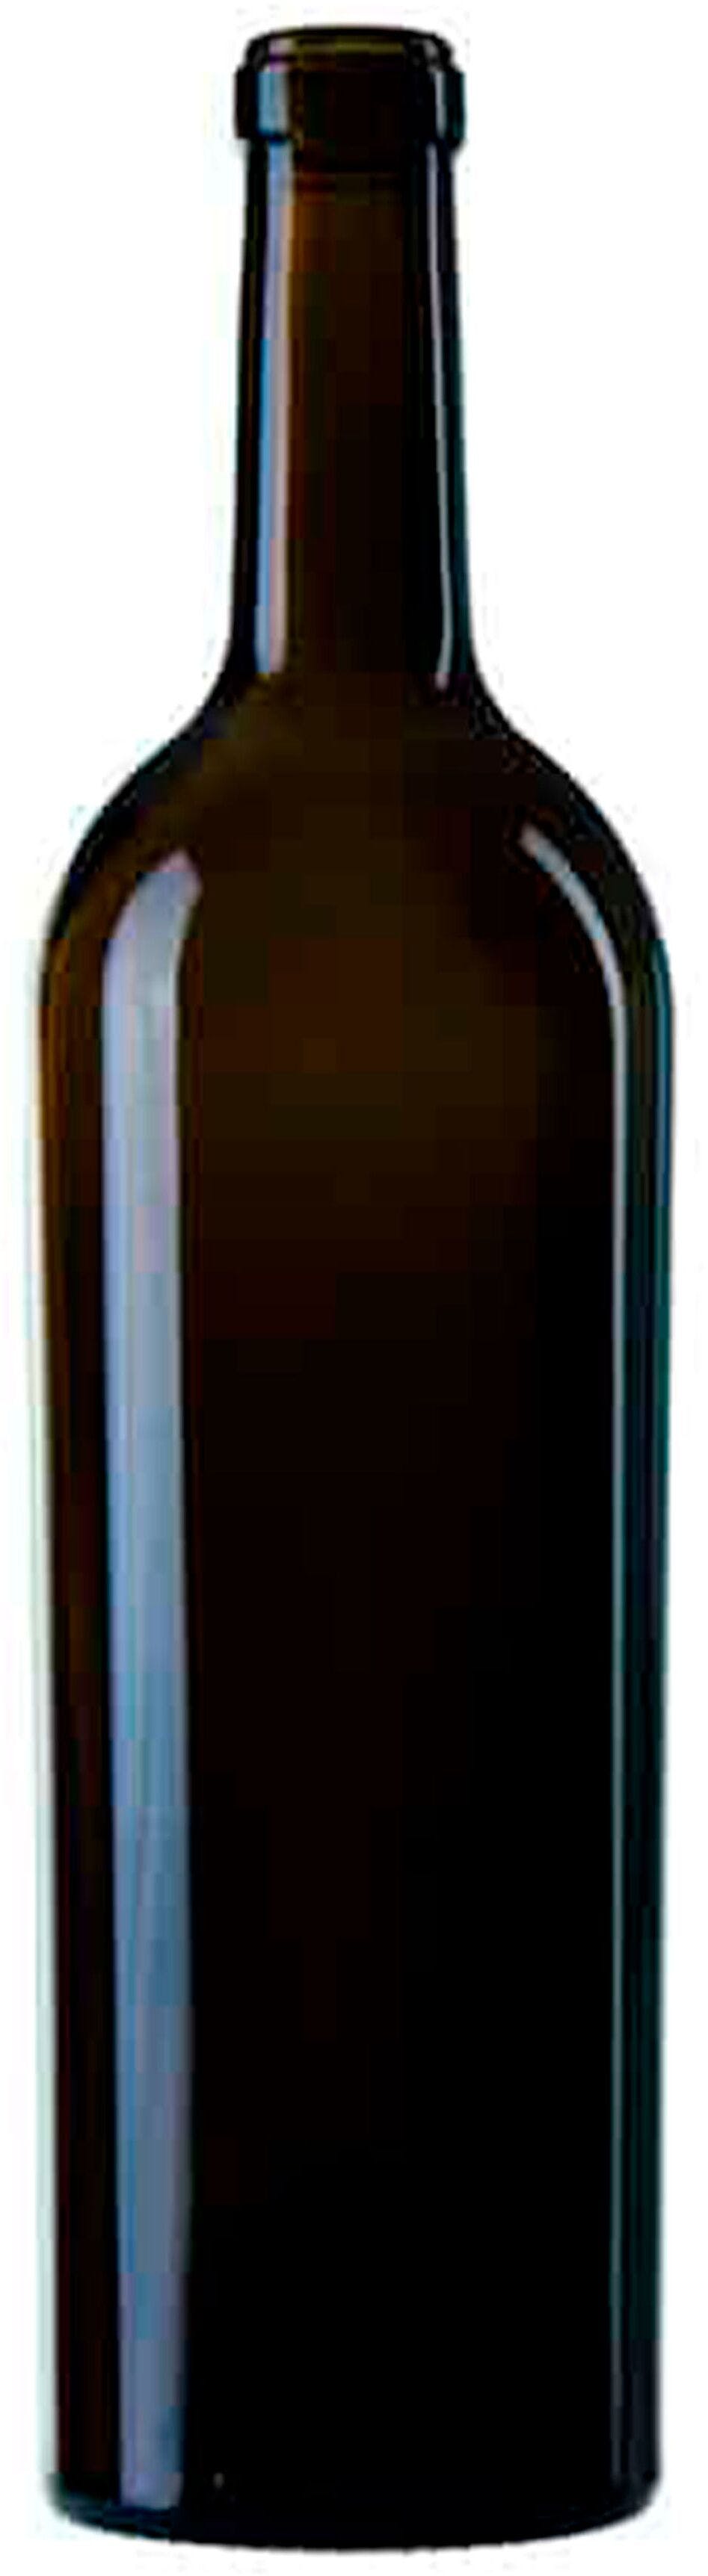 Bottle BORDOLESE  ANNI 50 750 ml BG-Cork